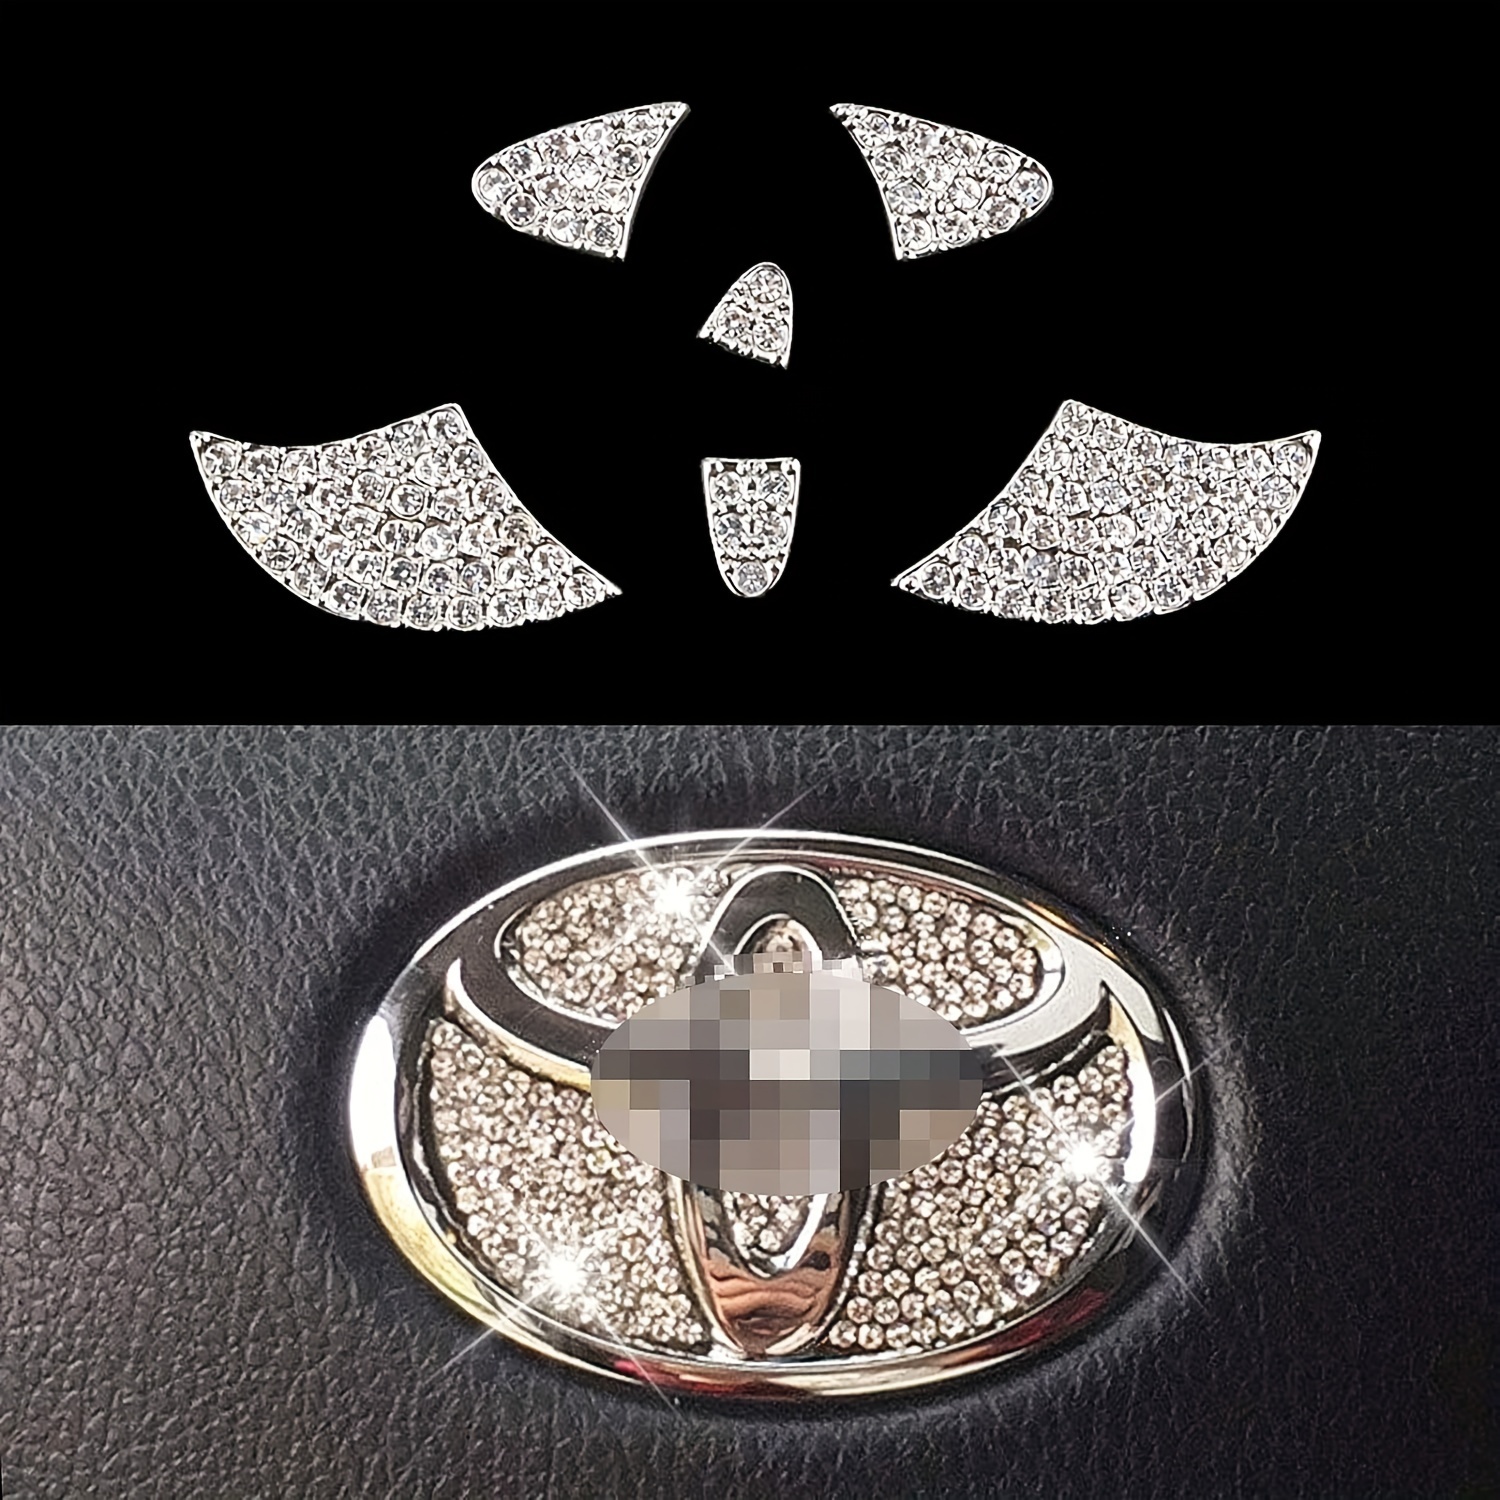 

Shiny Steering Wheel Logo Cover For Toyota - Diy Diamond Crystal, Interior Trim Accessory Badge For Camry, Corolla, Rav4 - Fits Mark X &